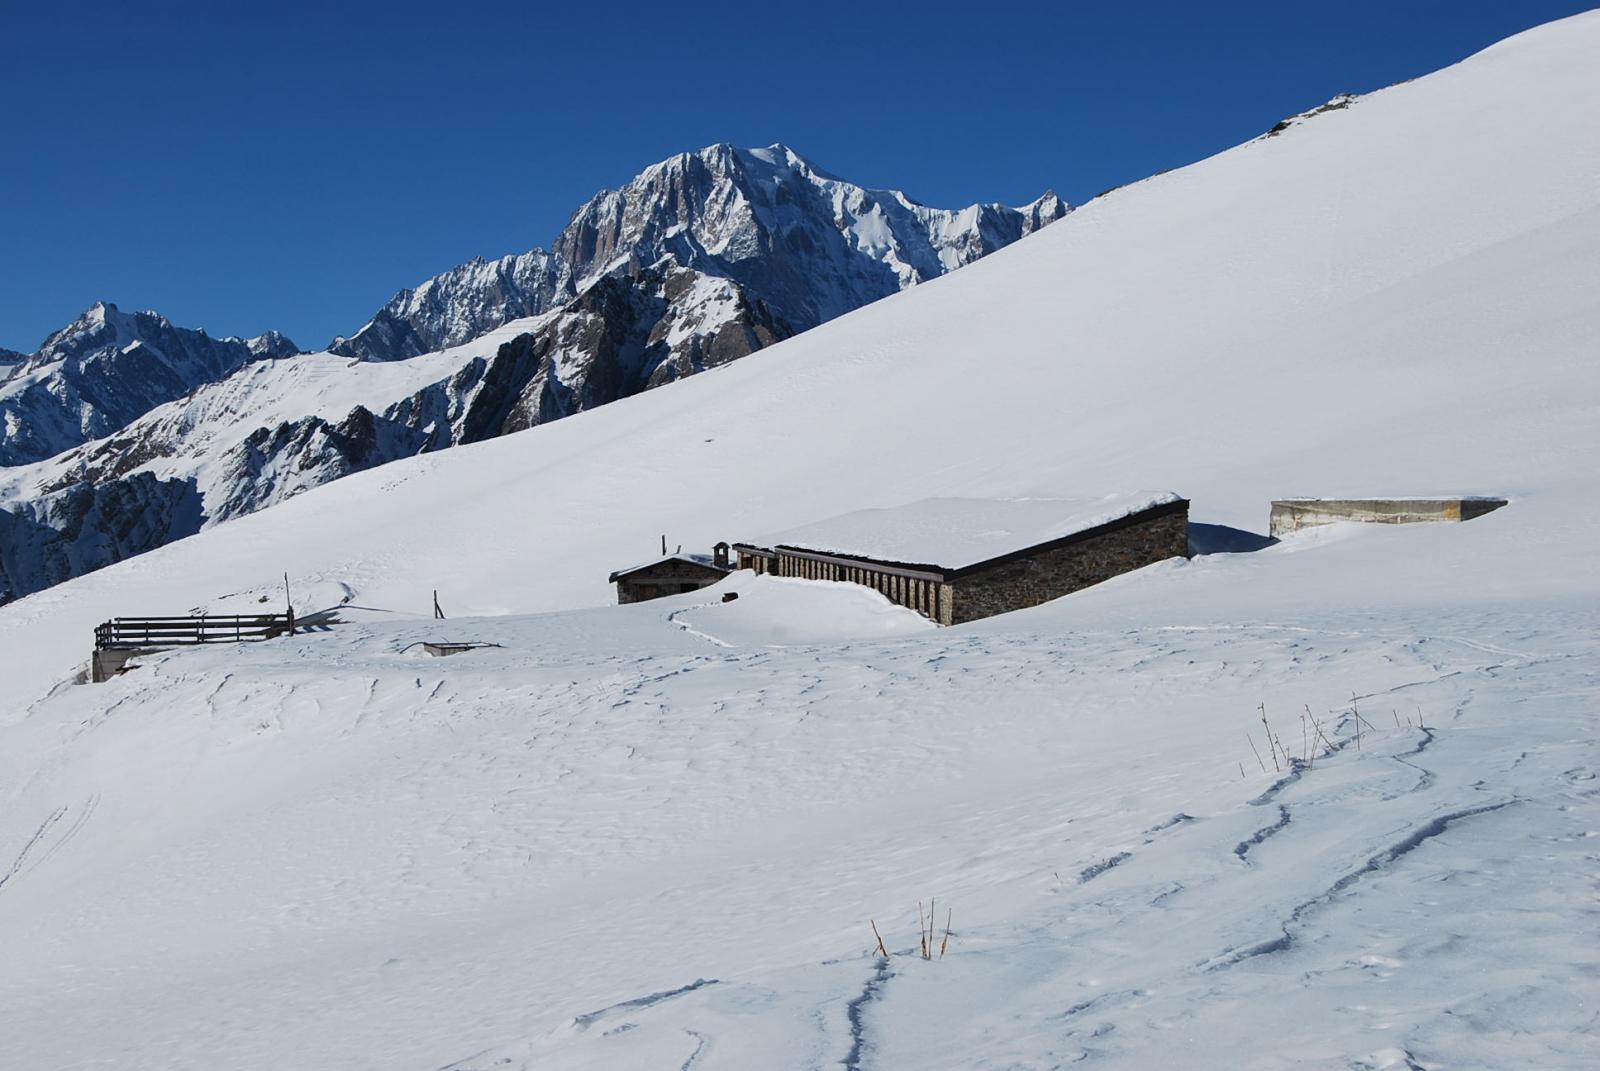 Tramail des Ors (2390 m) all'arrivo in discesa, e Monte Bianco